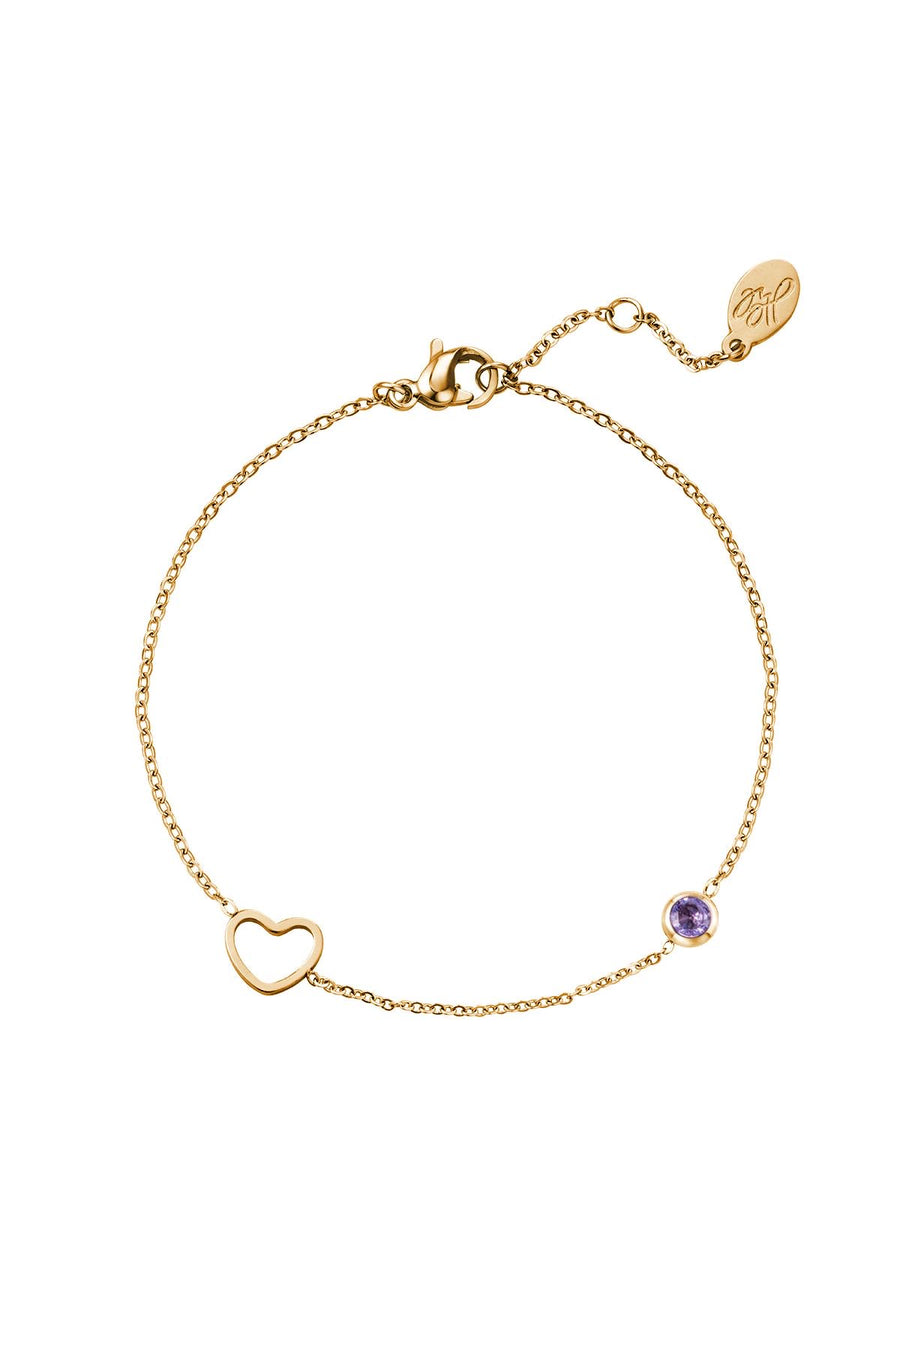 February/Purple Birthstone Bracelet